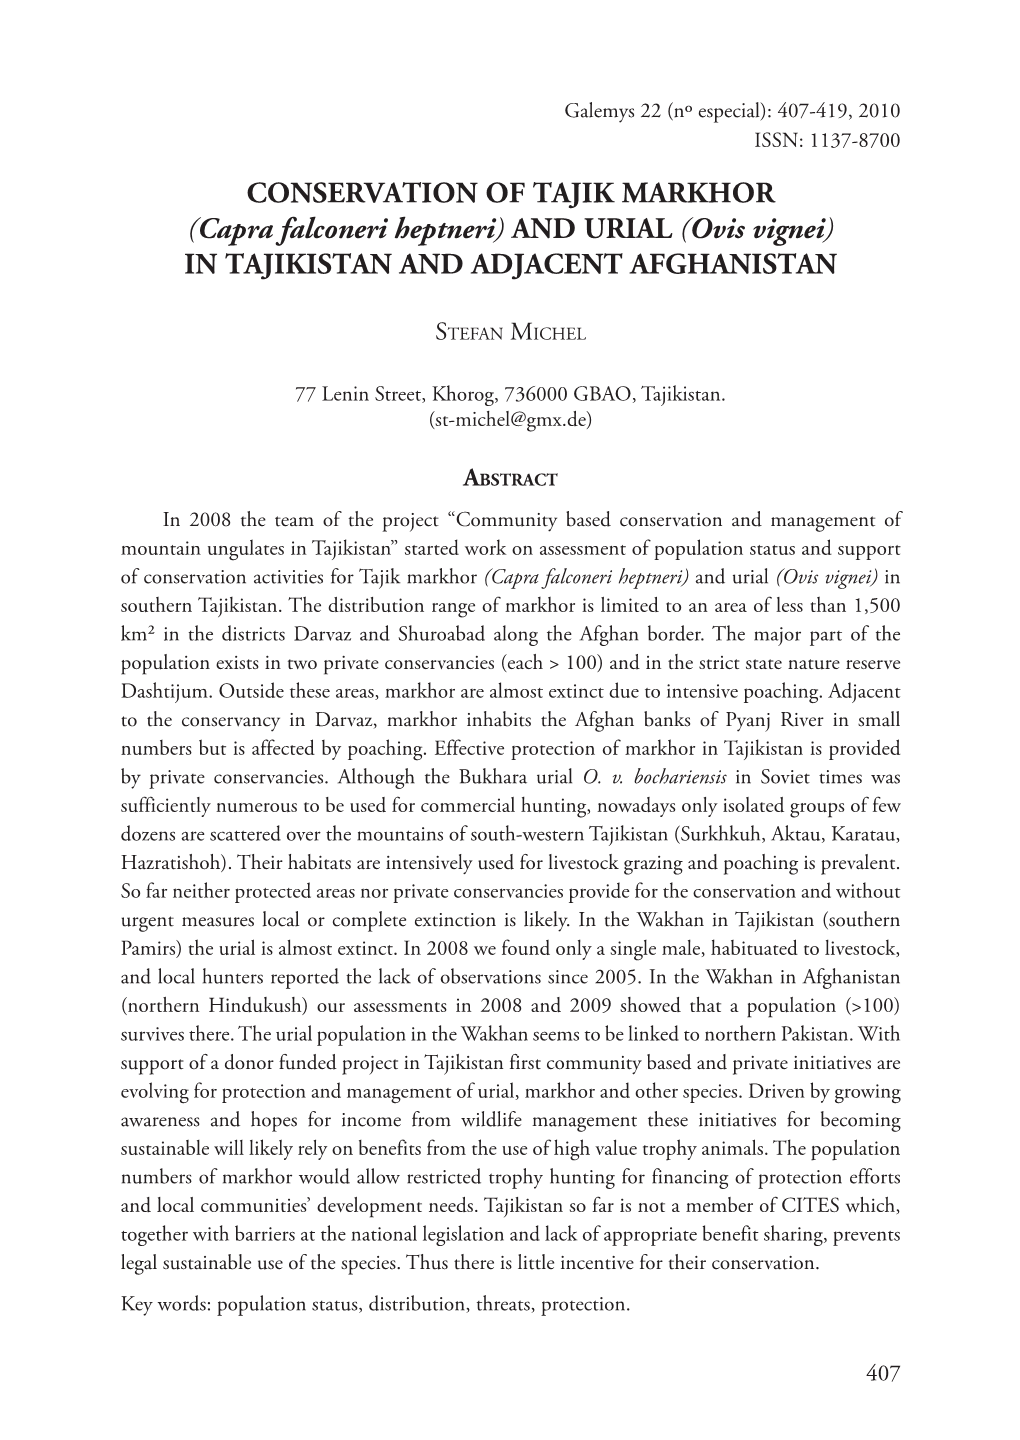 CONSERVATION of TAJIK MARKHOR (Capra Falconeri Heptneri) and URIAL (Ovis Vignei) in TAJIKISTAN and ADJACENT AFGHANISTAN